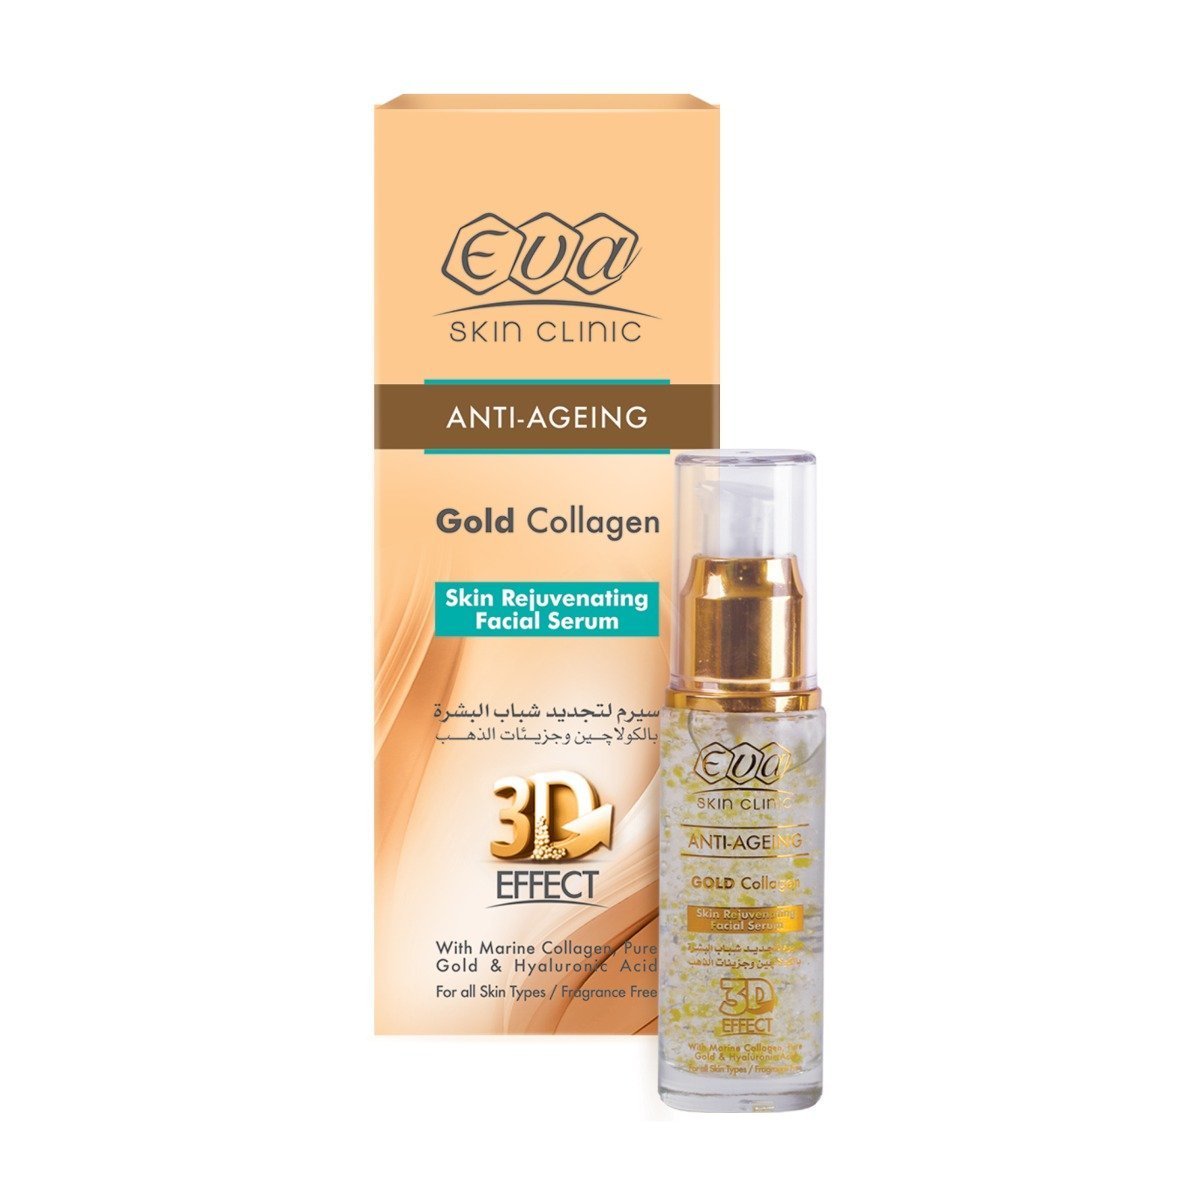 Eva Skin Clinic Gold Collagen Skin Rejuvenating Facial Serum - 30ml - Bloom Pharmacy